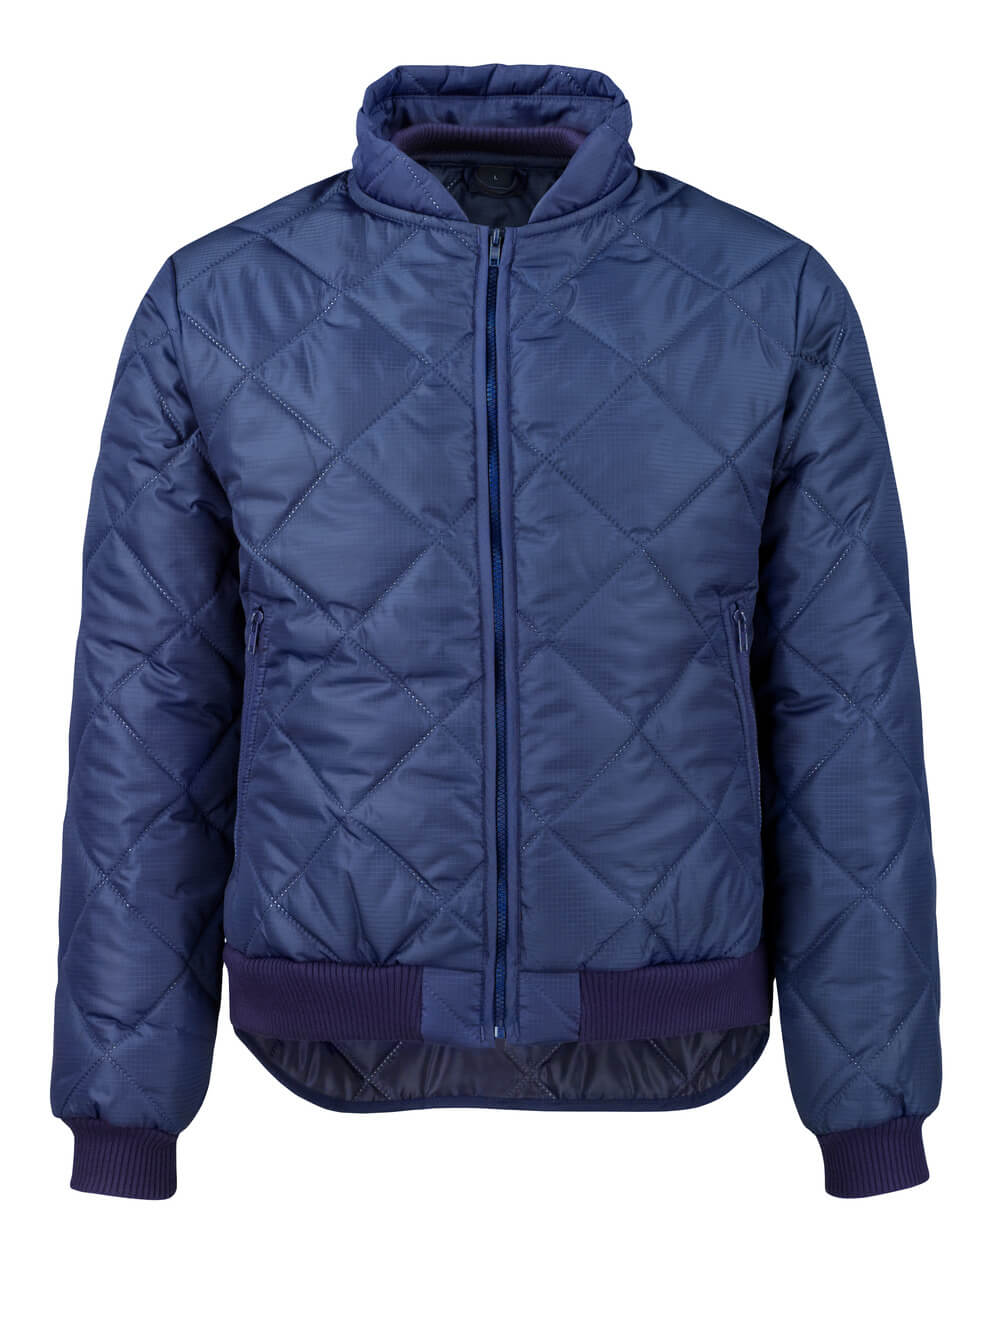 MASCOT®ORIGINALS Thermal jacket Sudbury 13515 - DaltonSafety